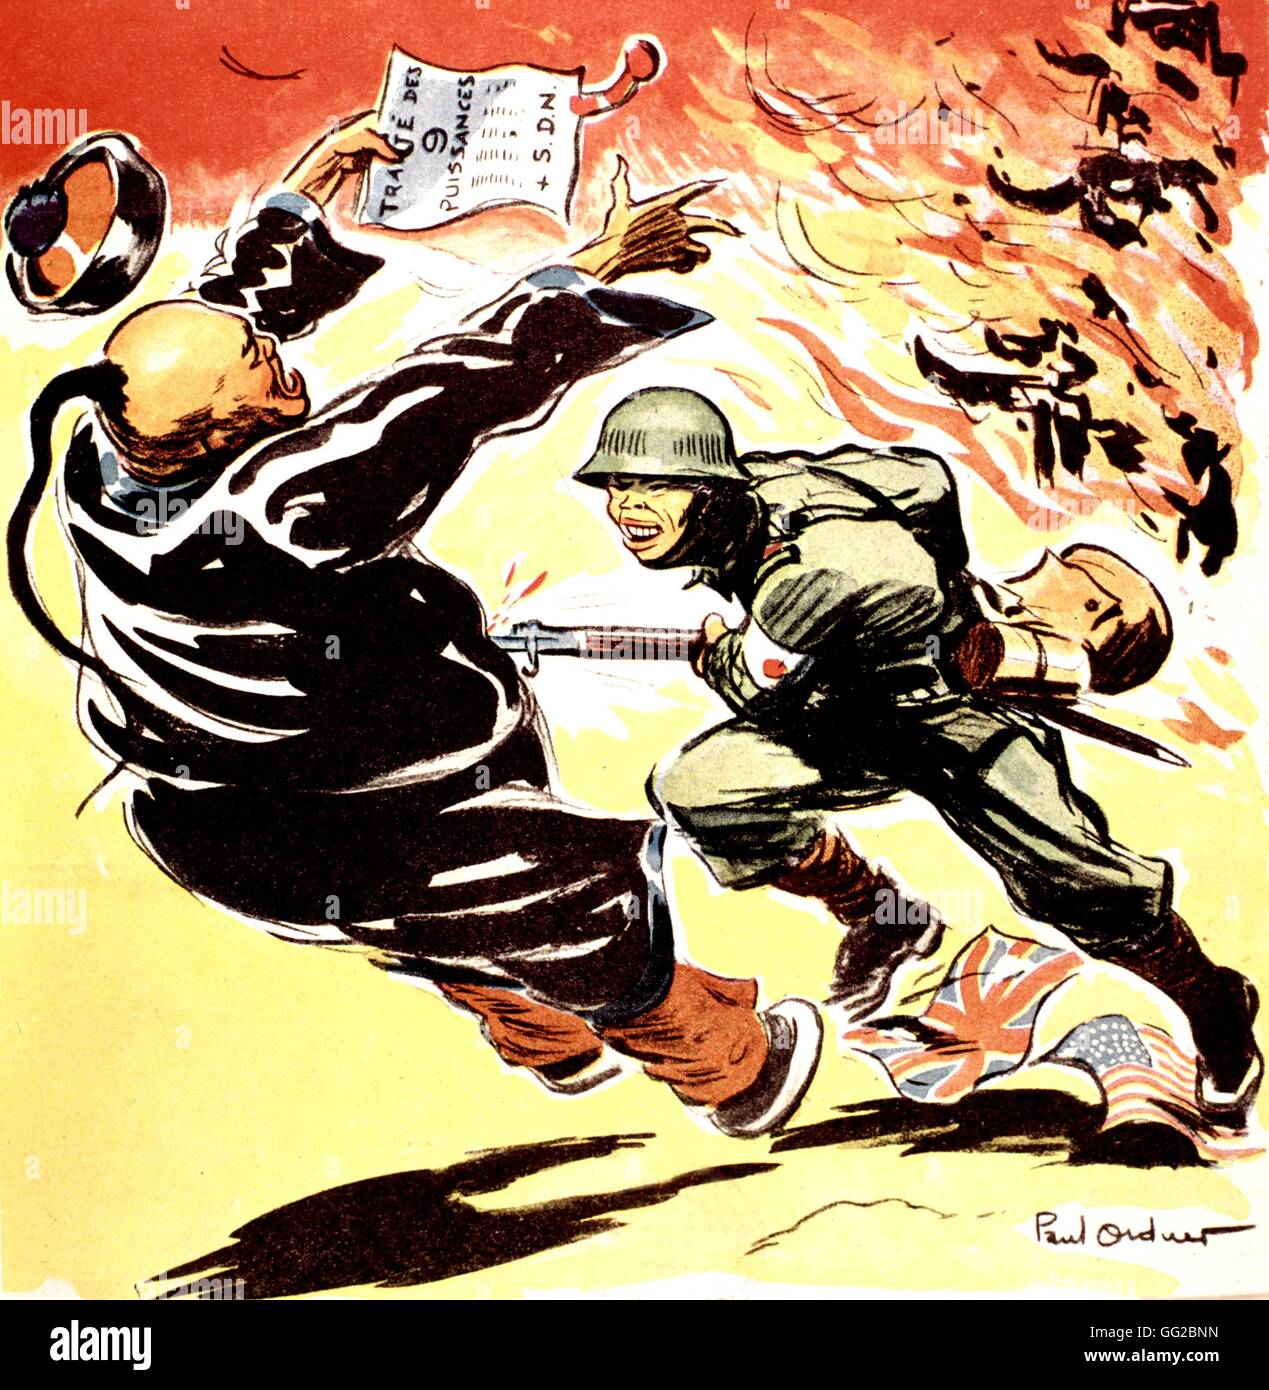 Vignetta satirica da Paolo Ordner 1938 guerra Chinese-Japanese Foto Stock